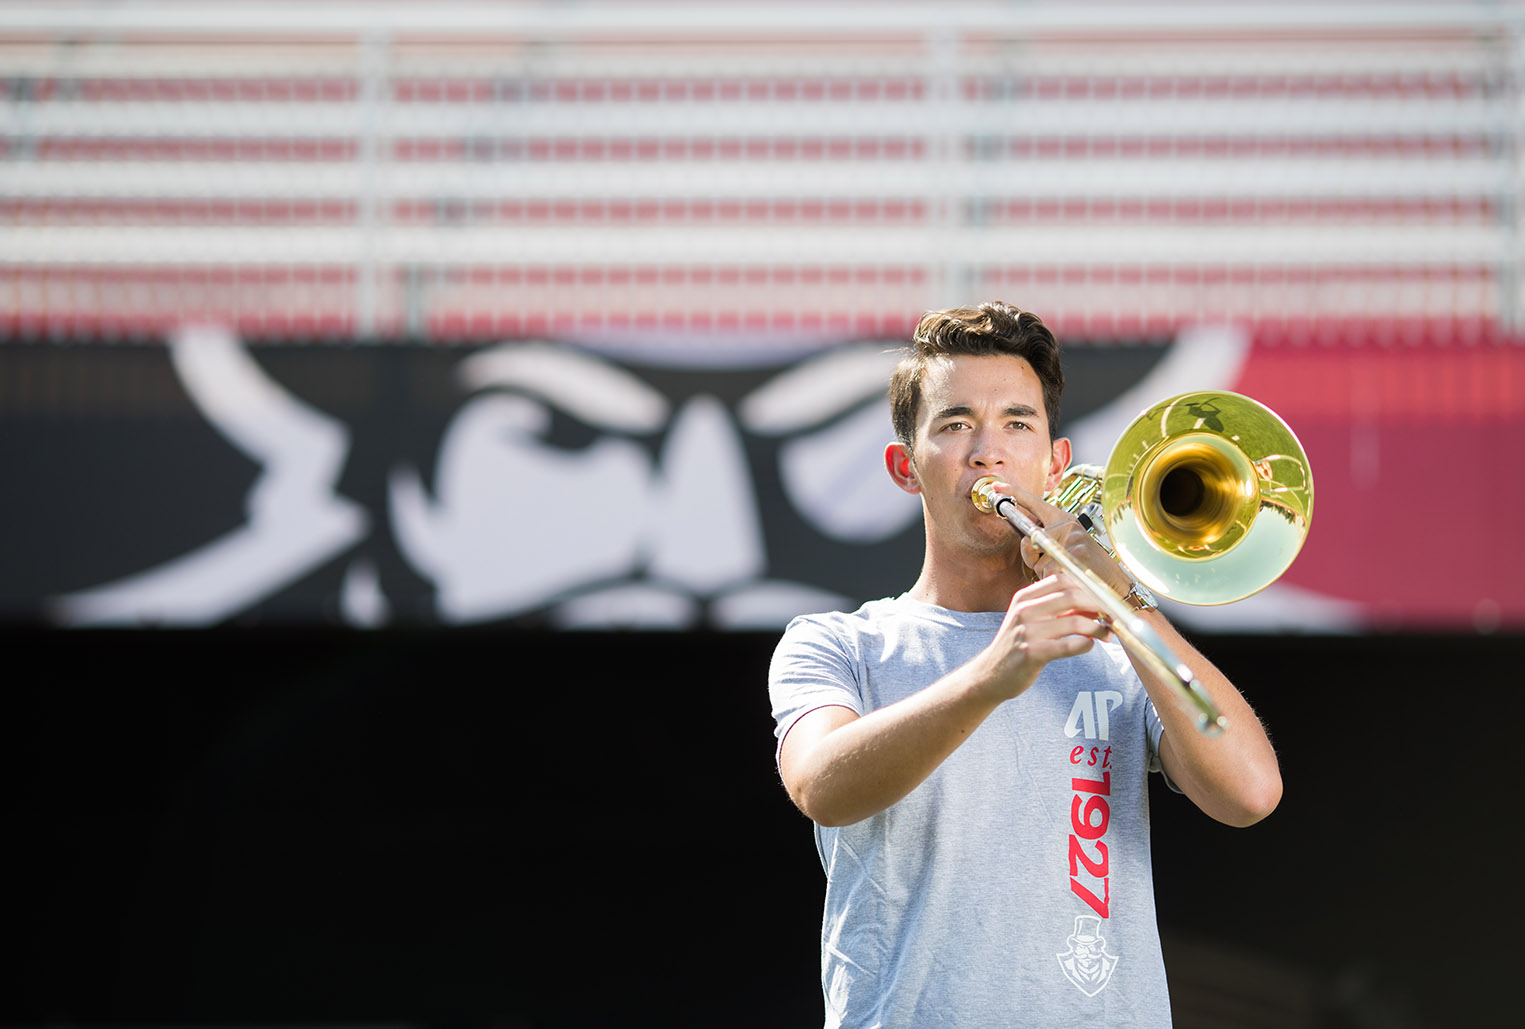 Garret Coscolluela playing instrument in stadium